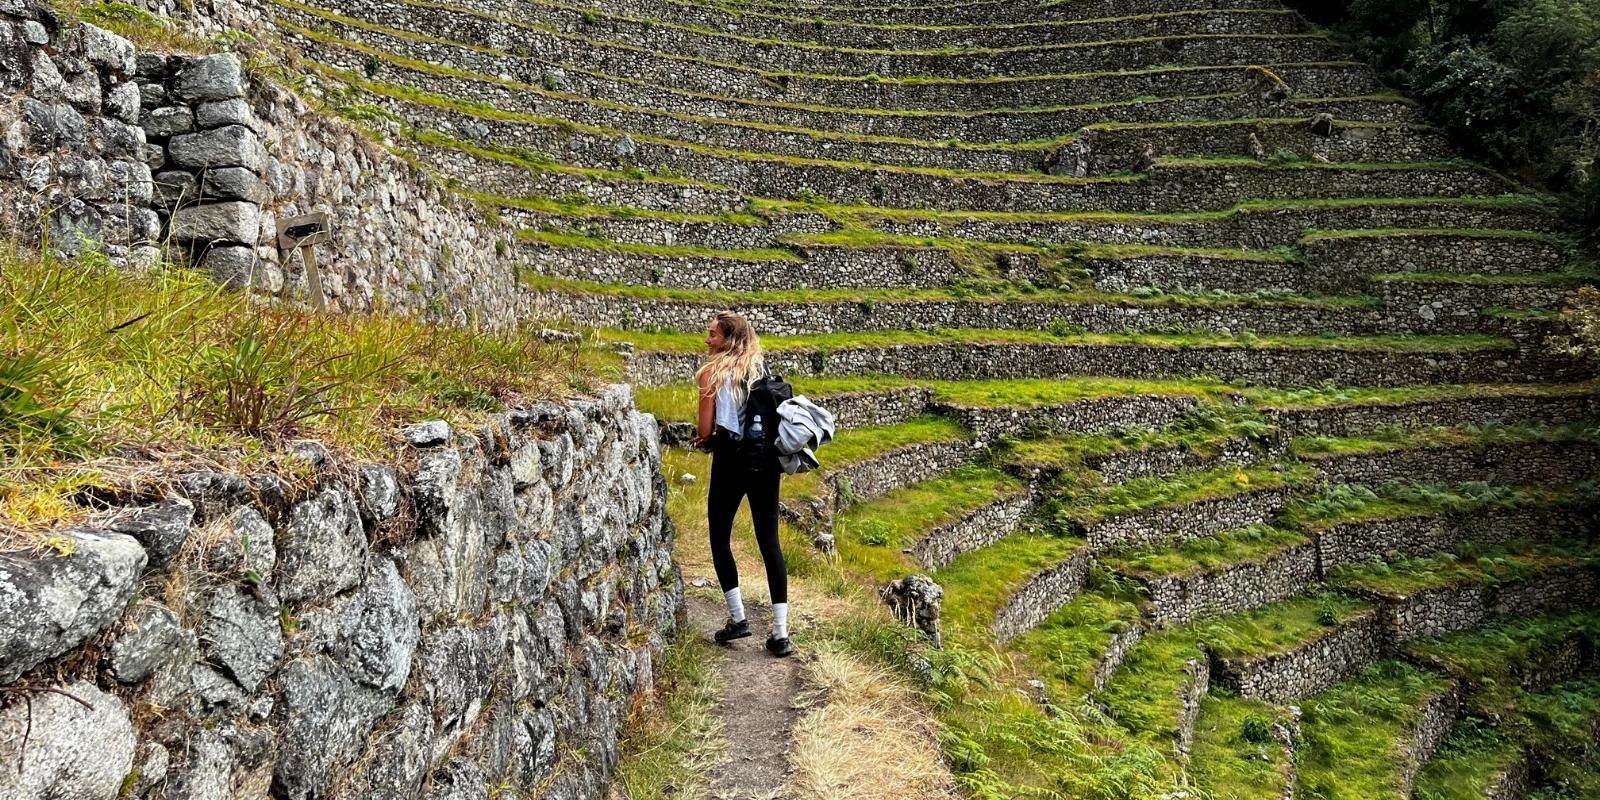 How Many Kilometers has the Classic Inca Trail